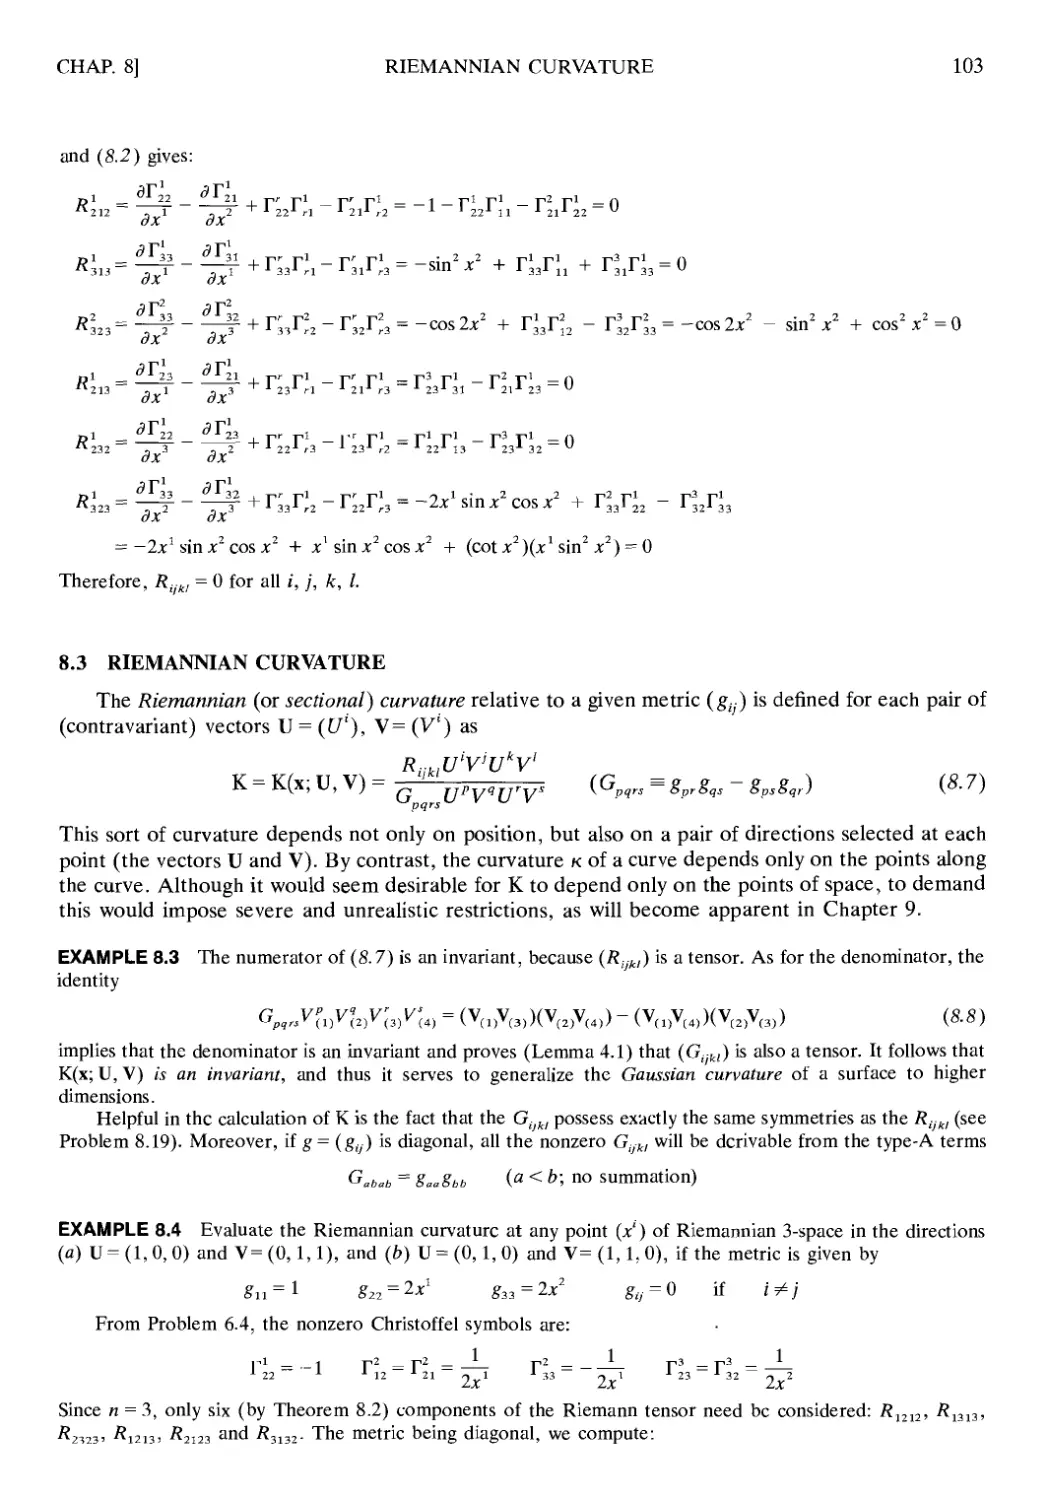 8.3 Riemannian Curvature